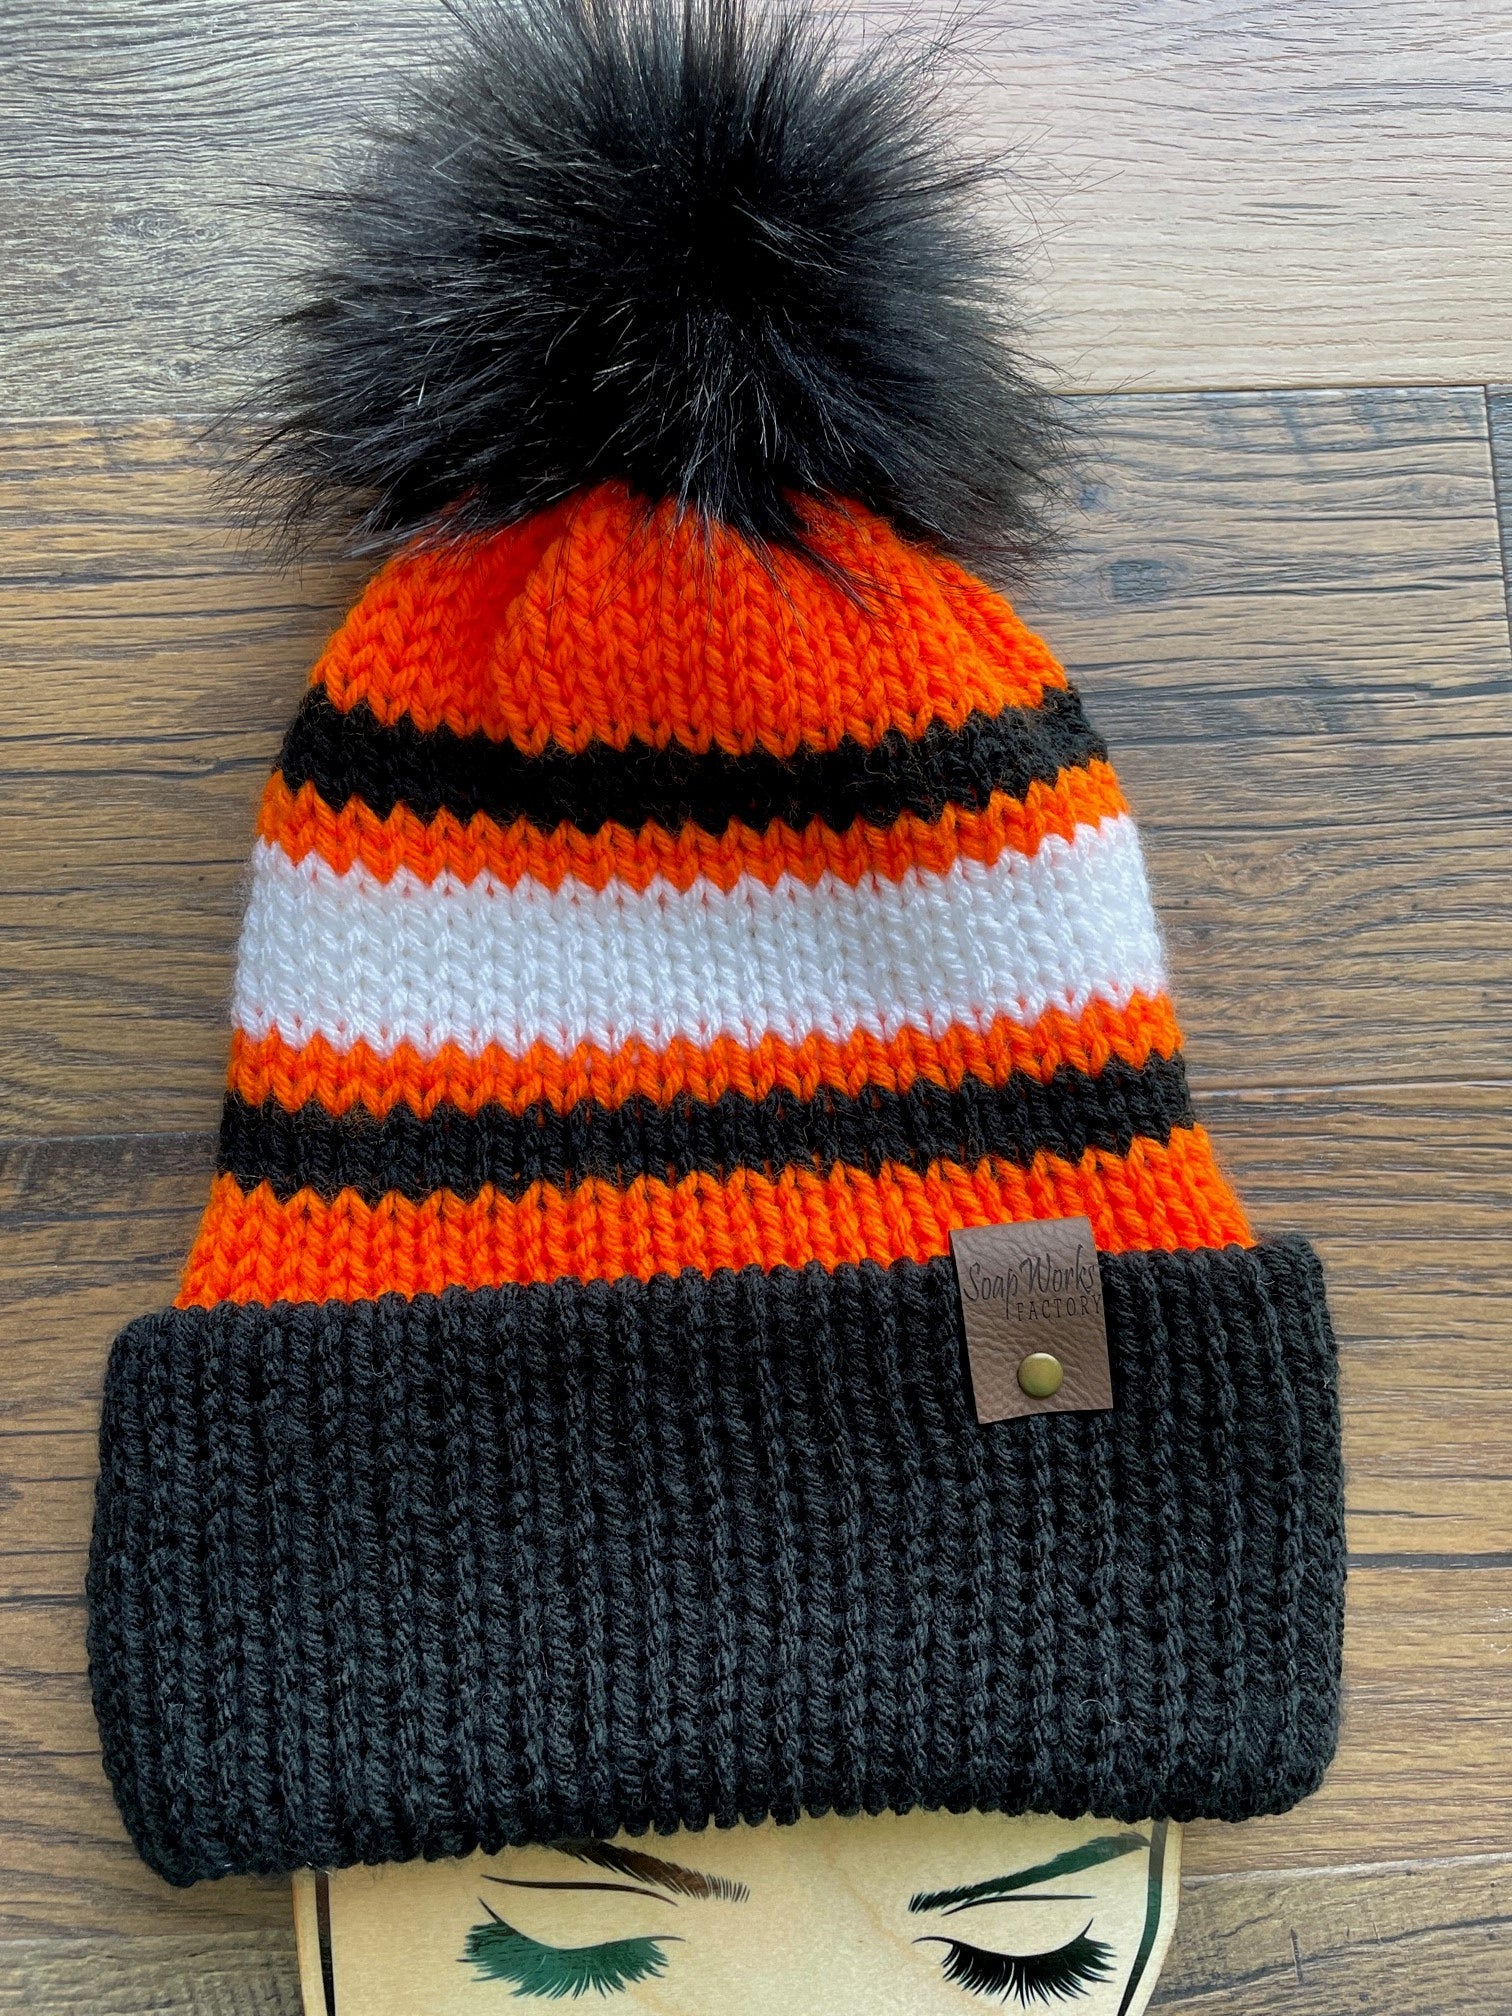 homemade knit hat orange and black